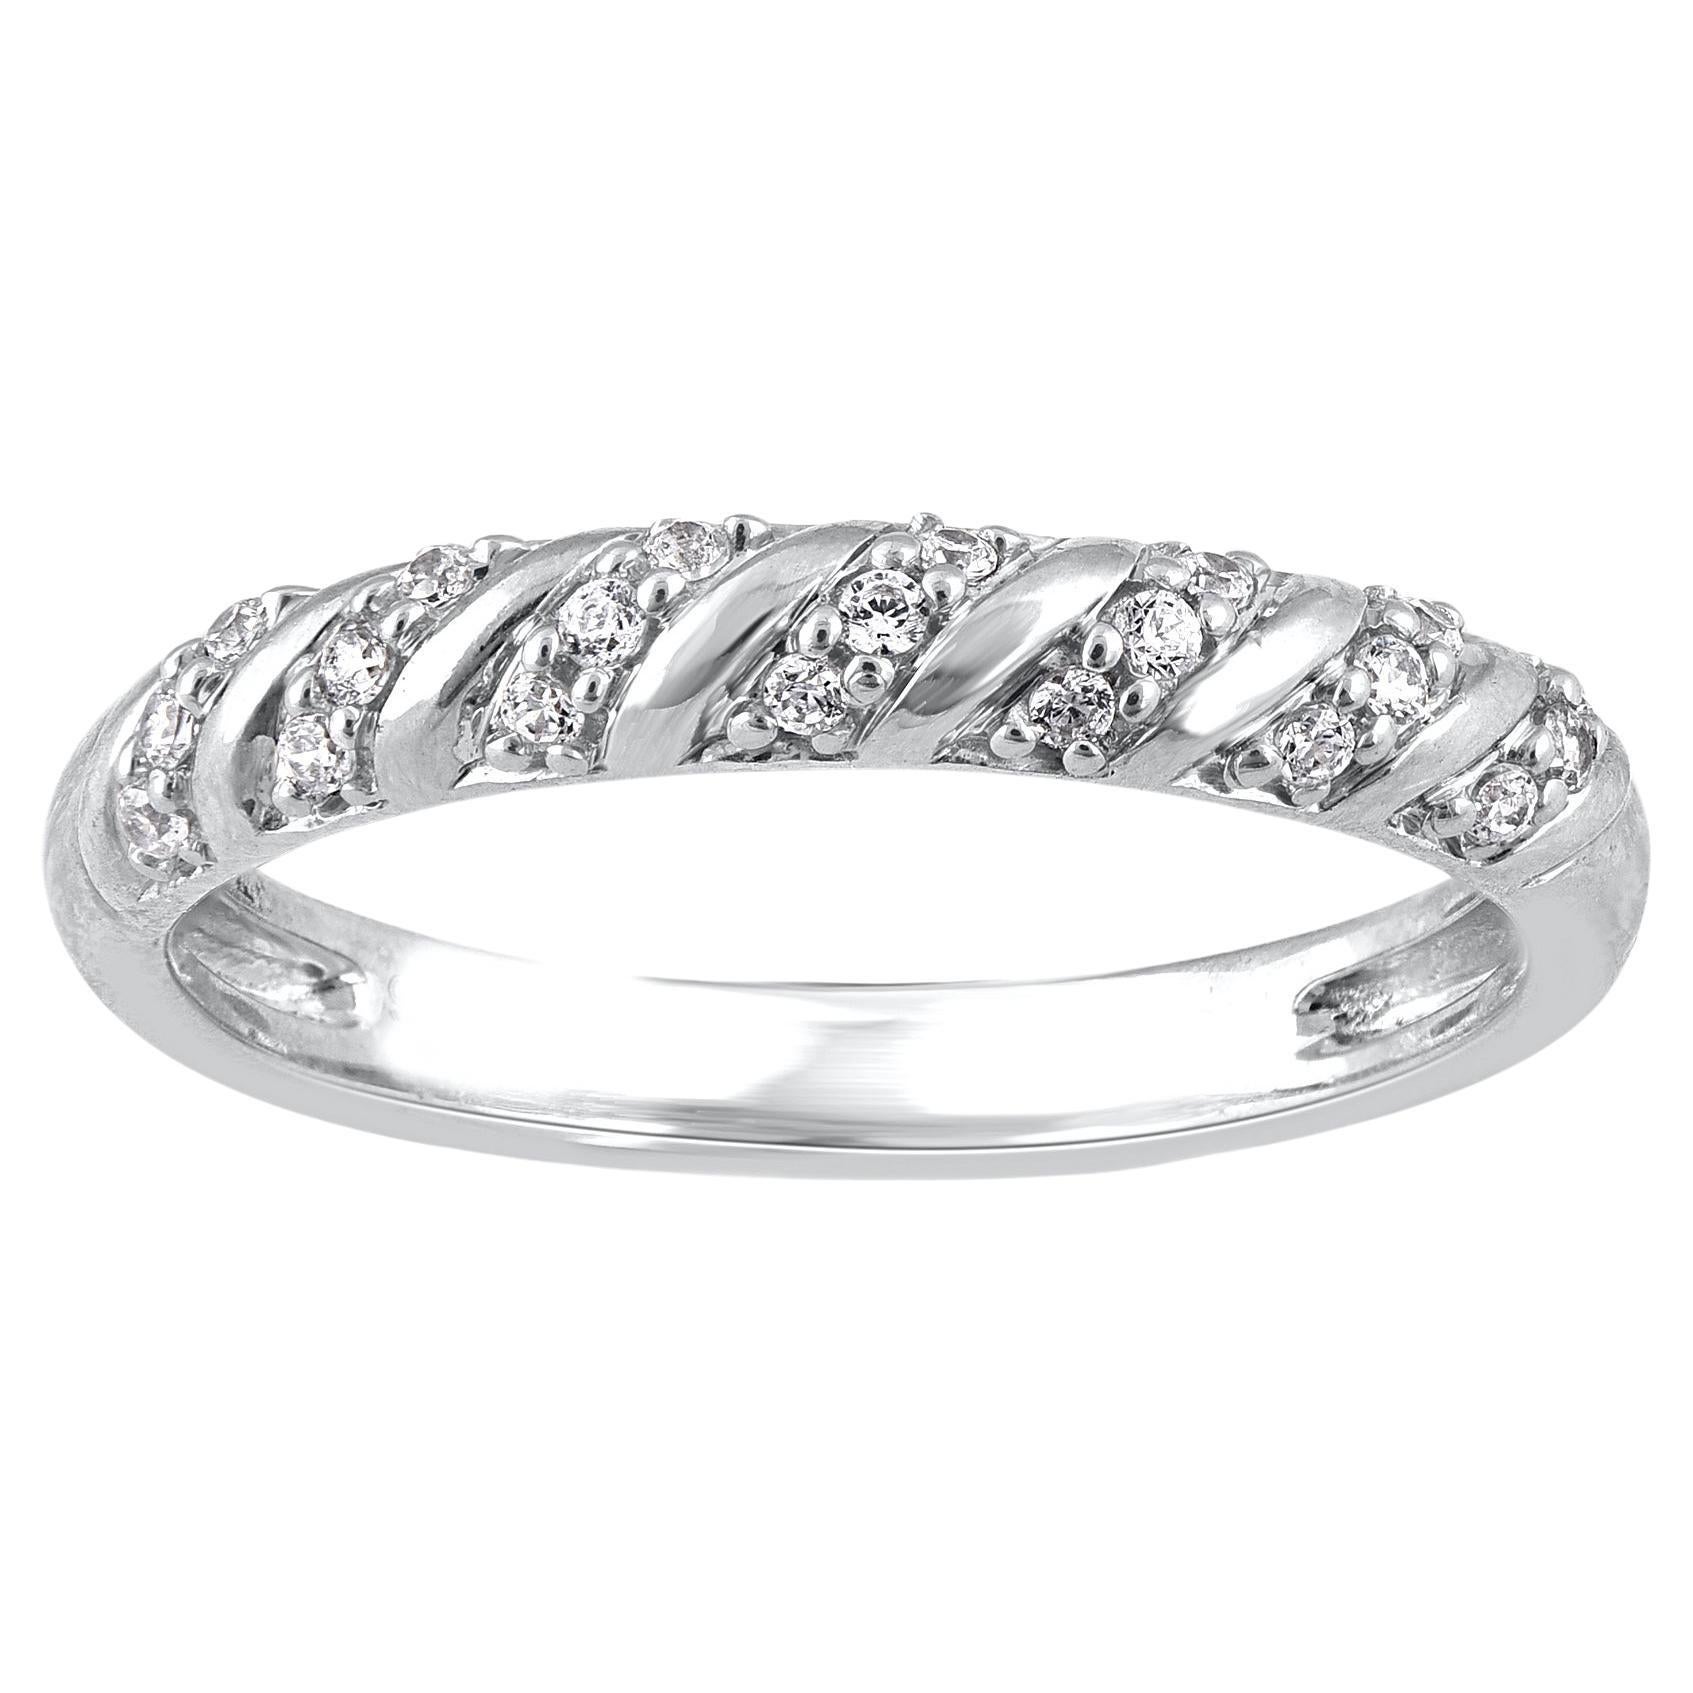 TJD 0.15 Carat Brilliant Cut Diamond 14 Karat White Gold Wedding Band Ring